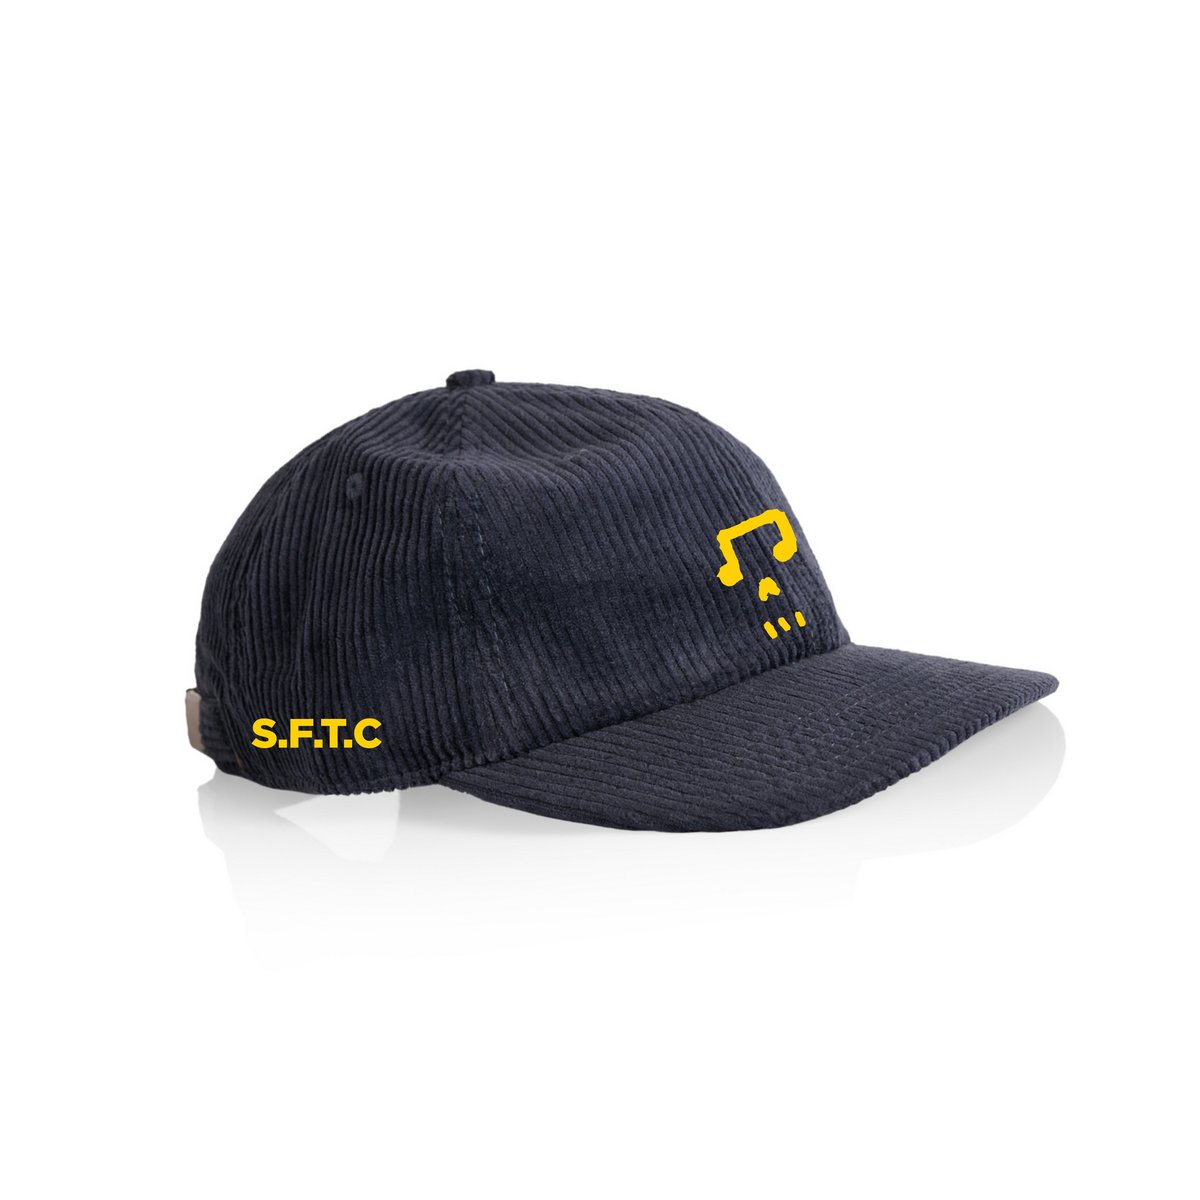 Image of S.F.T.C Hat 